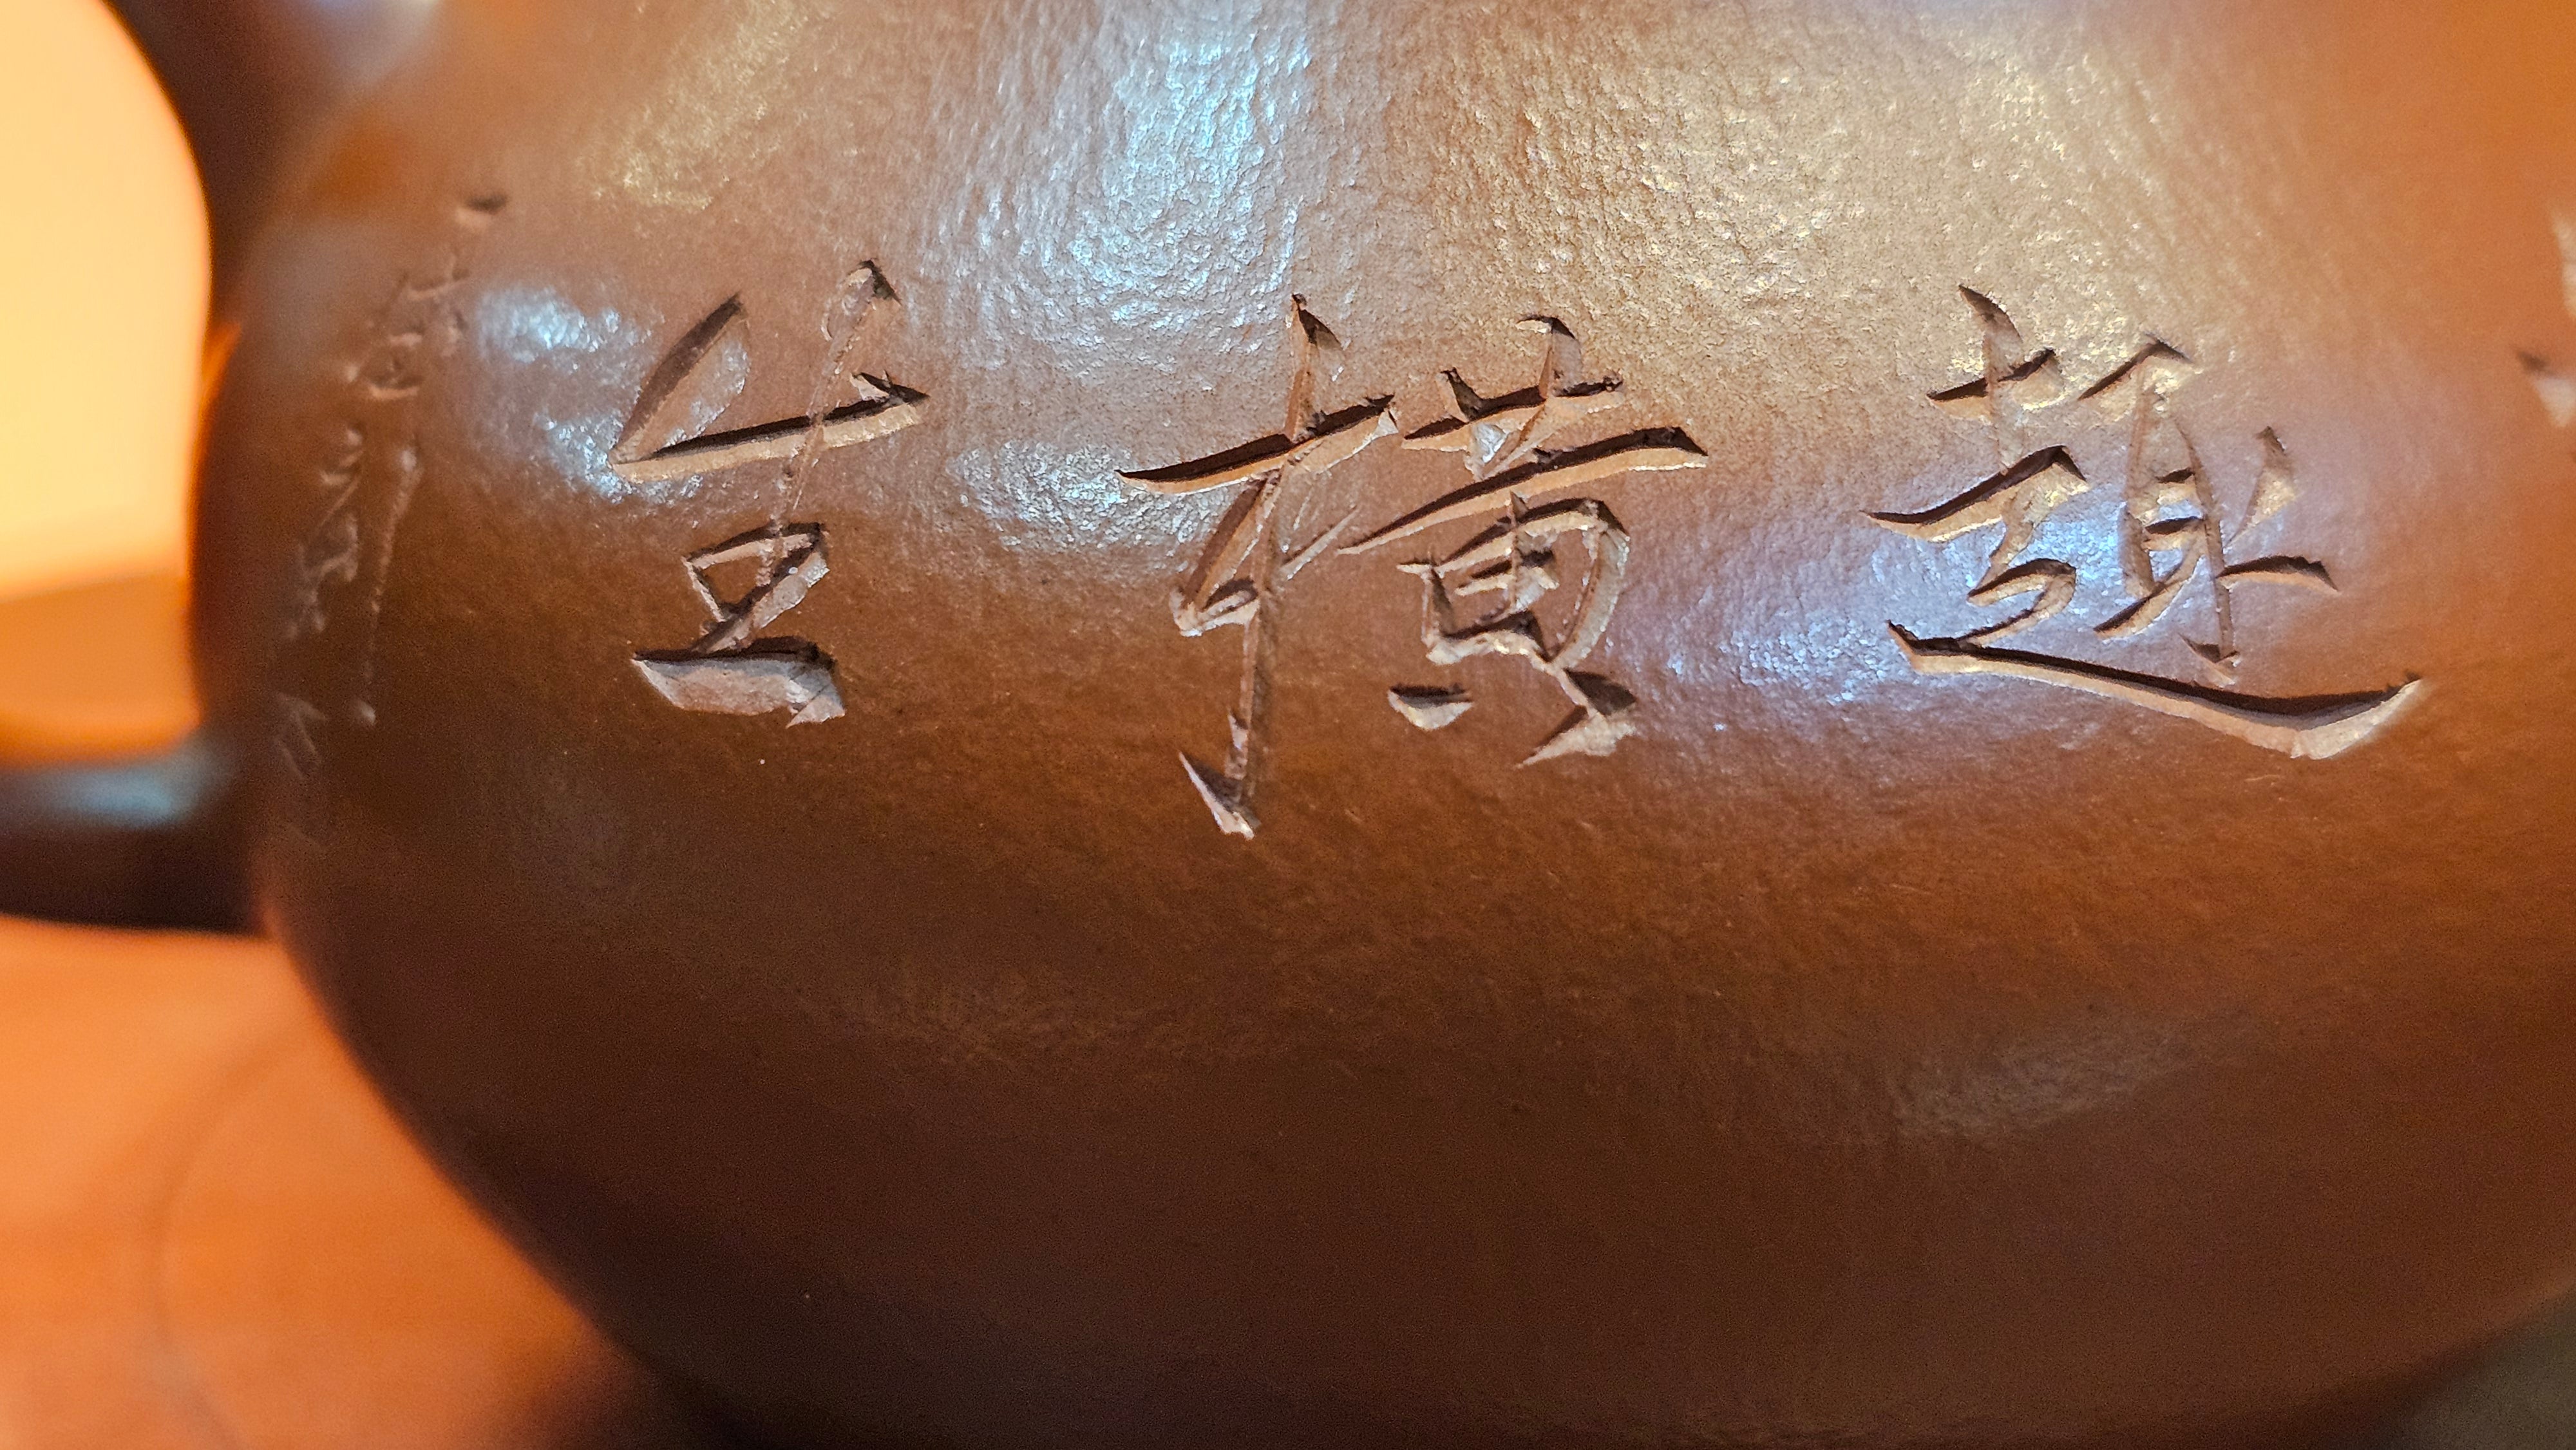 Li Xing 梨形, 175.5ml, Xiao Mei Yao Zhu Ni 小煤窑朱泥, by Craftsman Wang Xing 王兴, Engraving by Craftsman Ding Tie Ping 丁铁平 (Artistic Byname 一德).